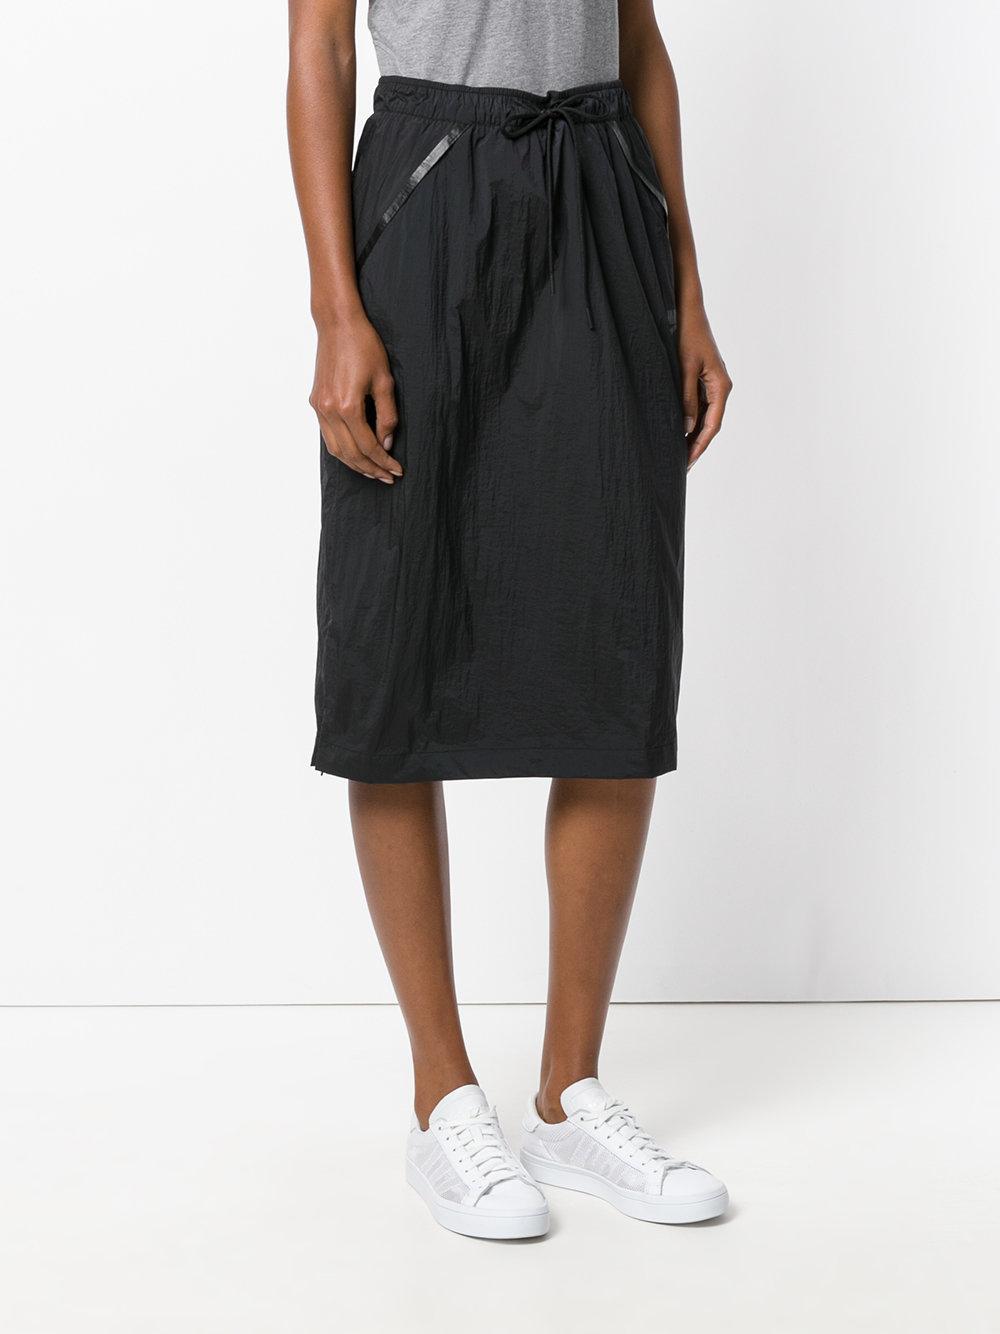 Nike Synthetic Track Midi Skirt in Black - Lyst